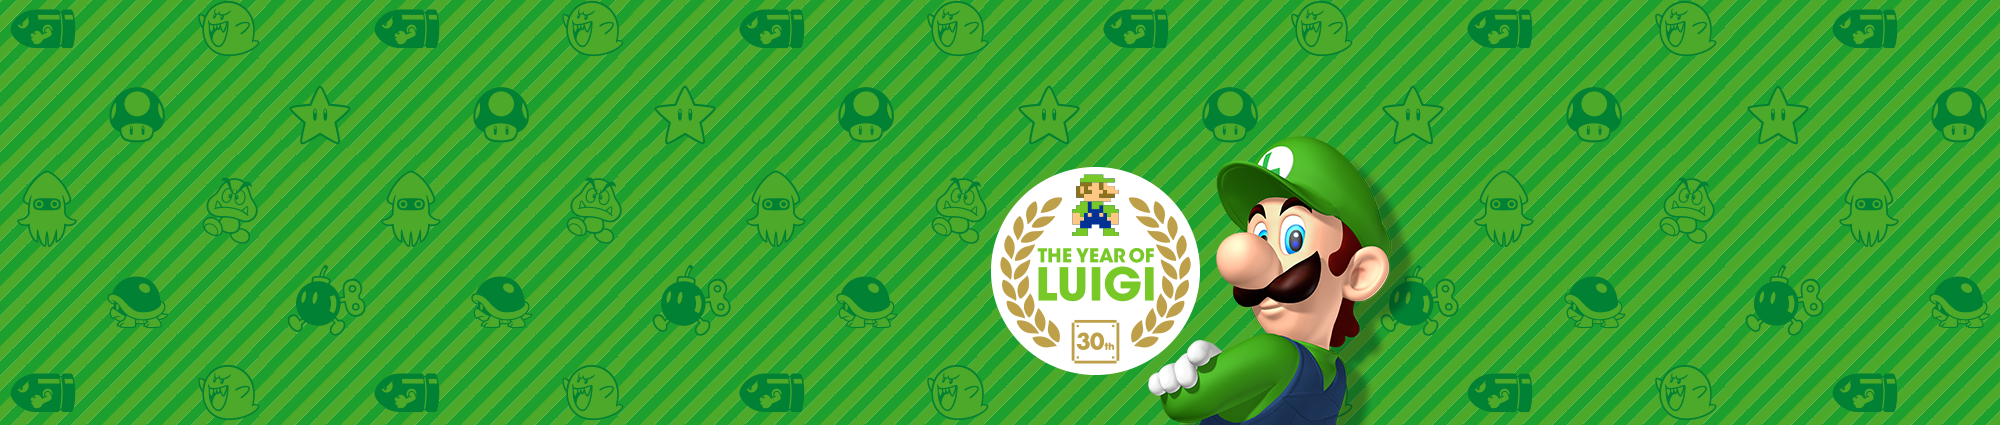 The Year of Luigi